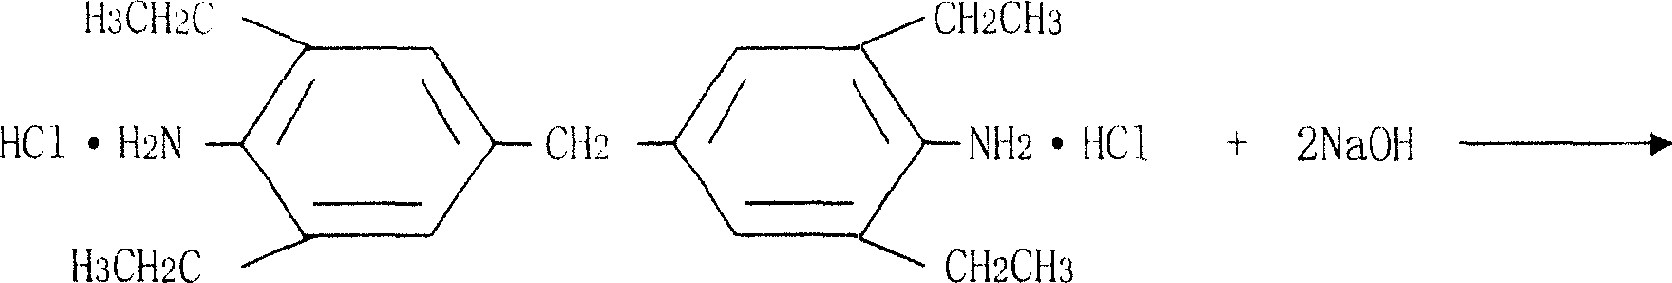 Prepn process of 4,4'-methylene-bis(2,6-diethyl aniline) (MDEA)